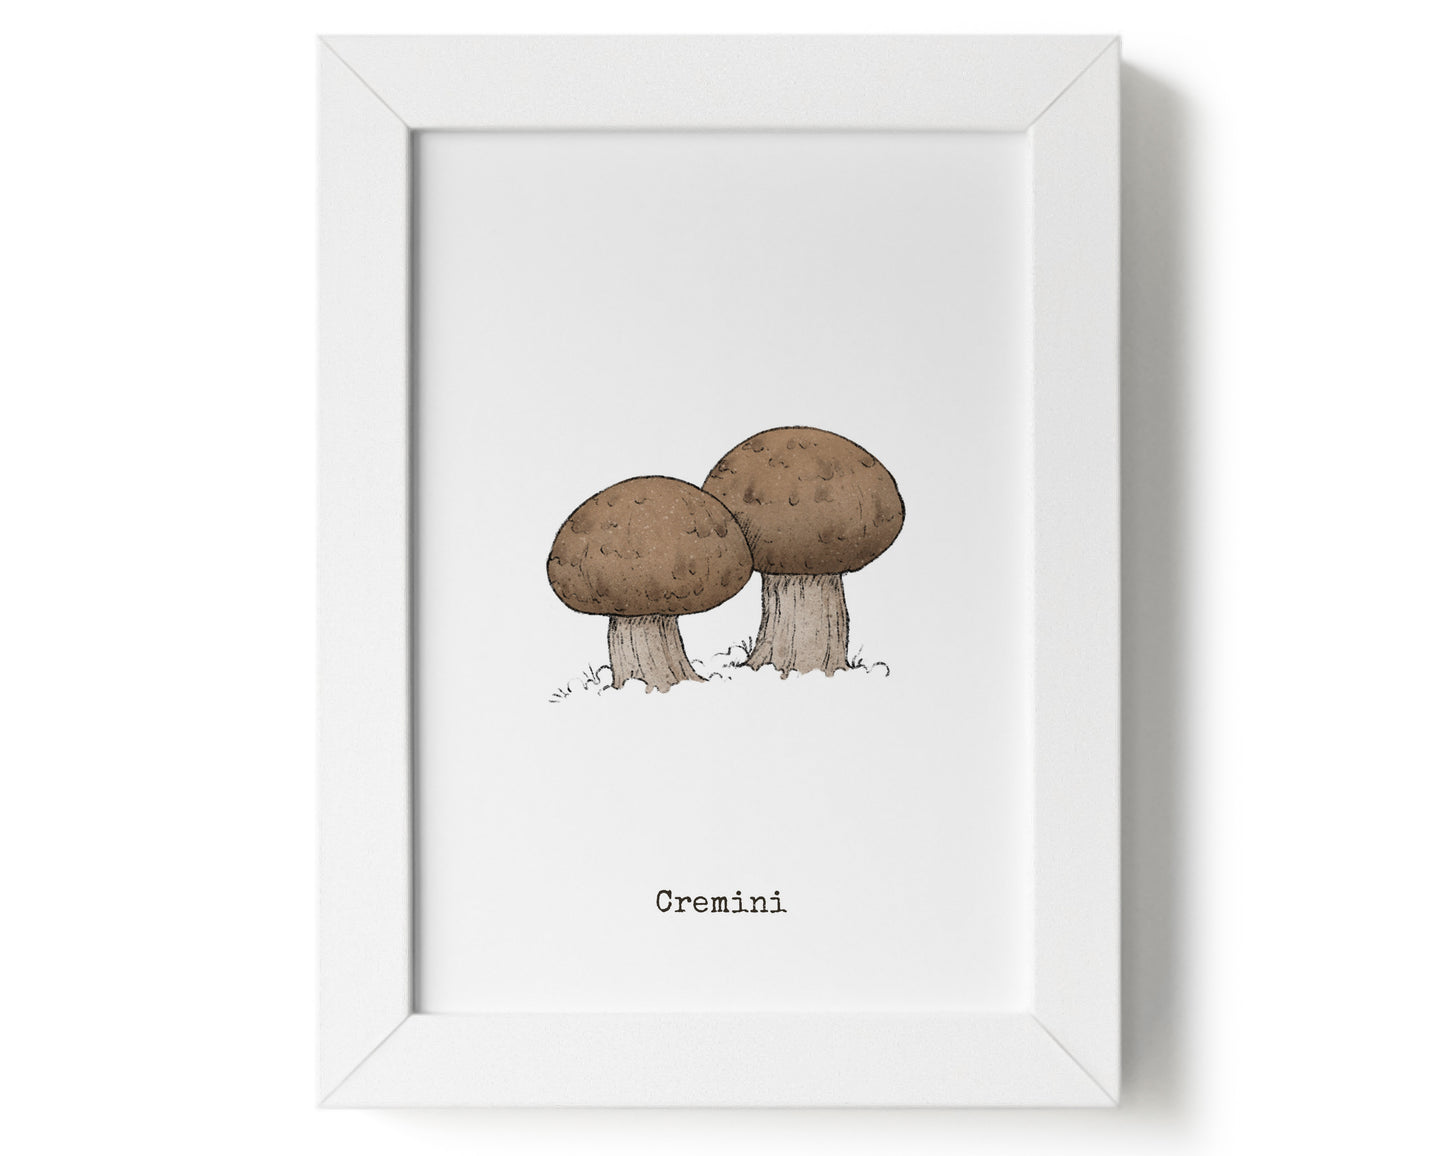 "Cremini Mushroom" by Catherine Hébert - Cremini Mushroom Art Print - 5"x7" size